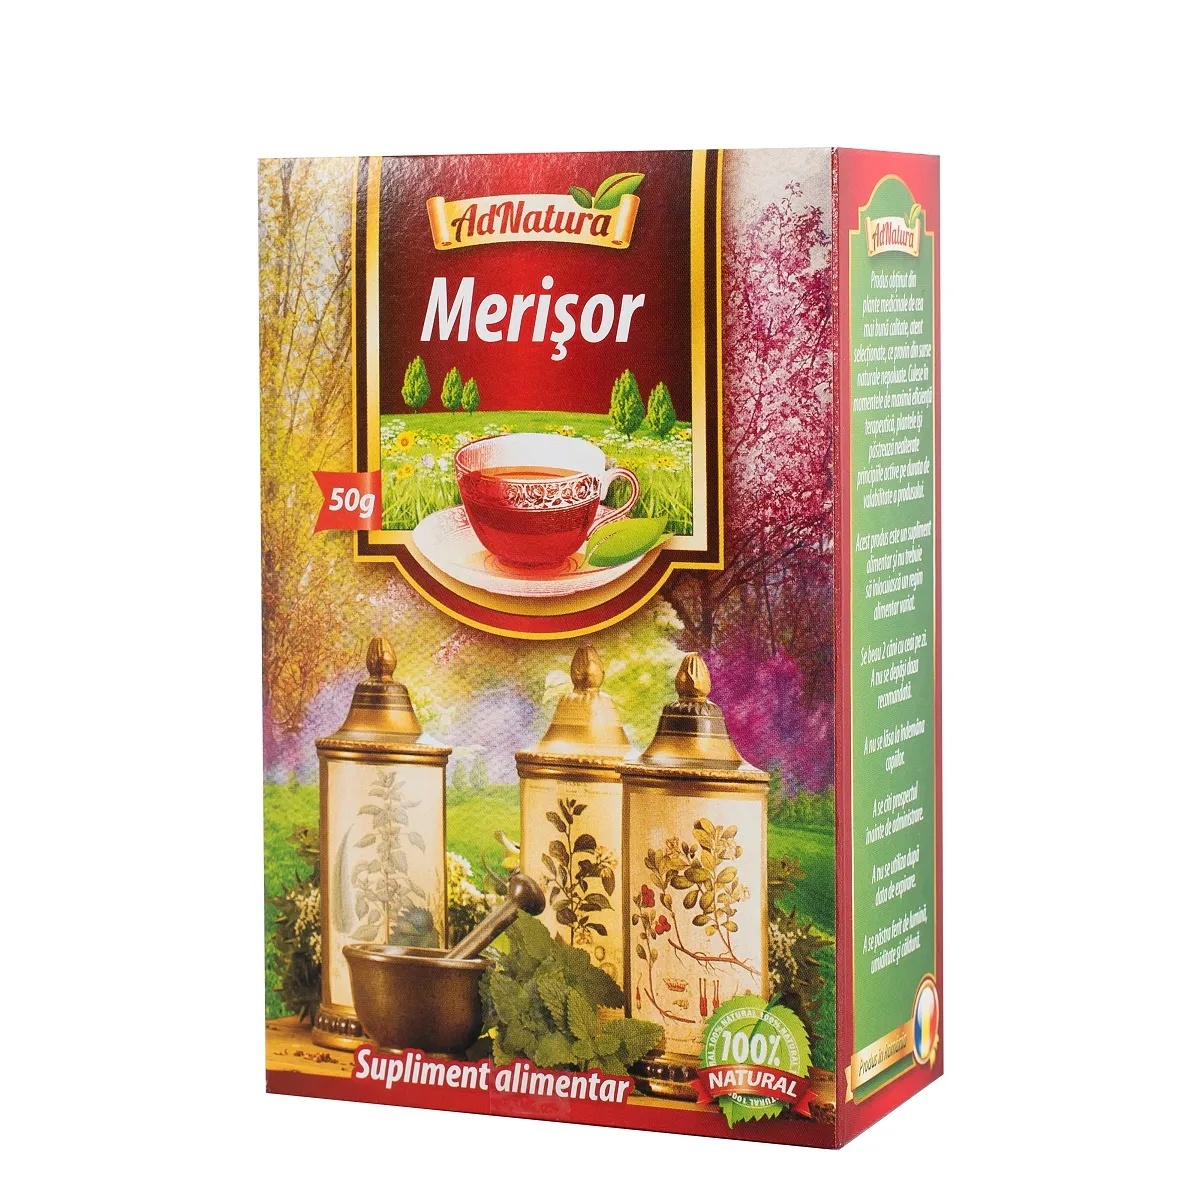 Ceai Merisor x 50g (AdNatura)